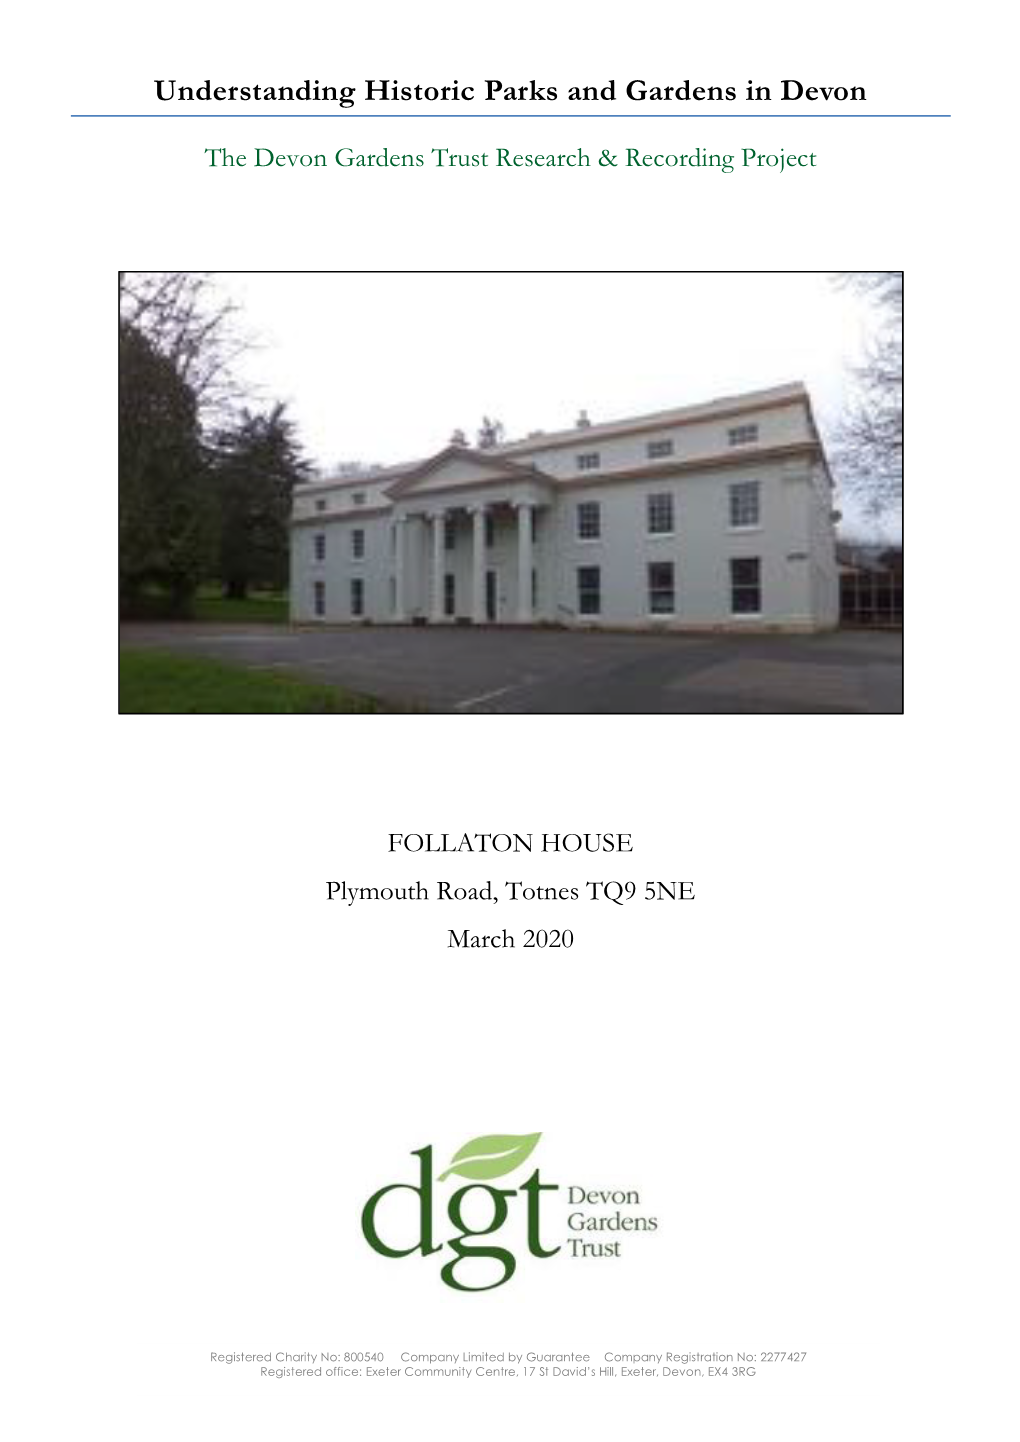 Devon Gardens Trust, Site Report: Follaton House, March 2020